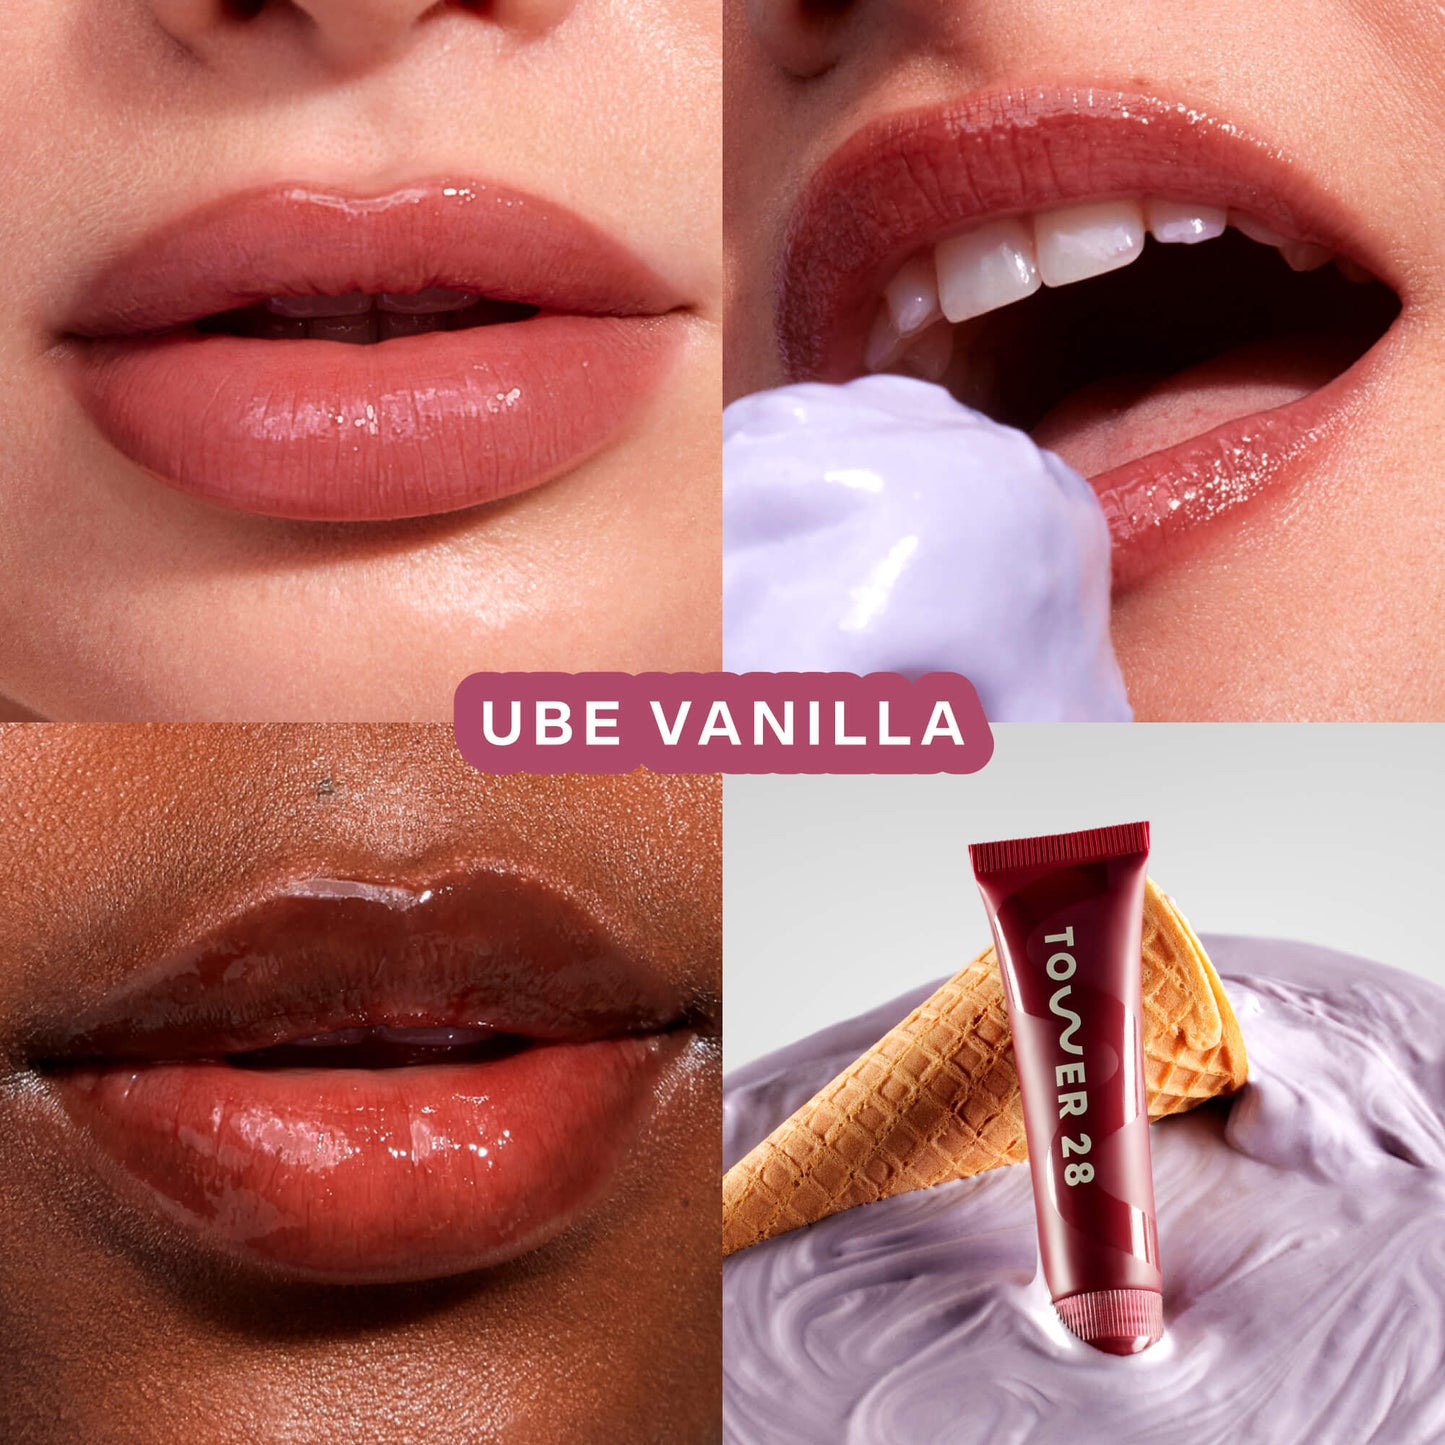 [Tower 28 Beauty's LipSoftie™ Lip Treatment in Ube Vanilla applied on three different skin tones]